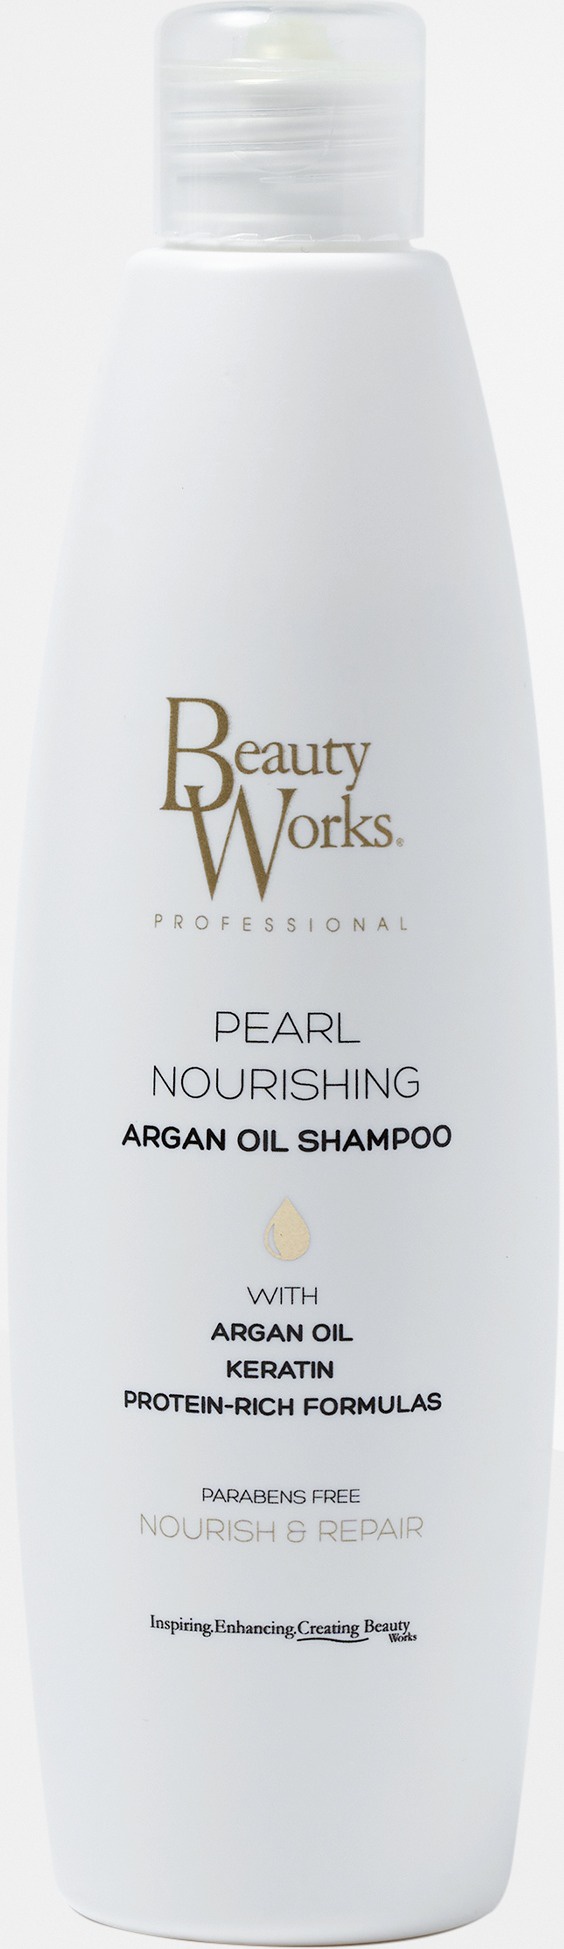 Beauty Works Pearl Nourishing Argan Oil Shampoo